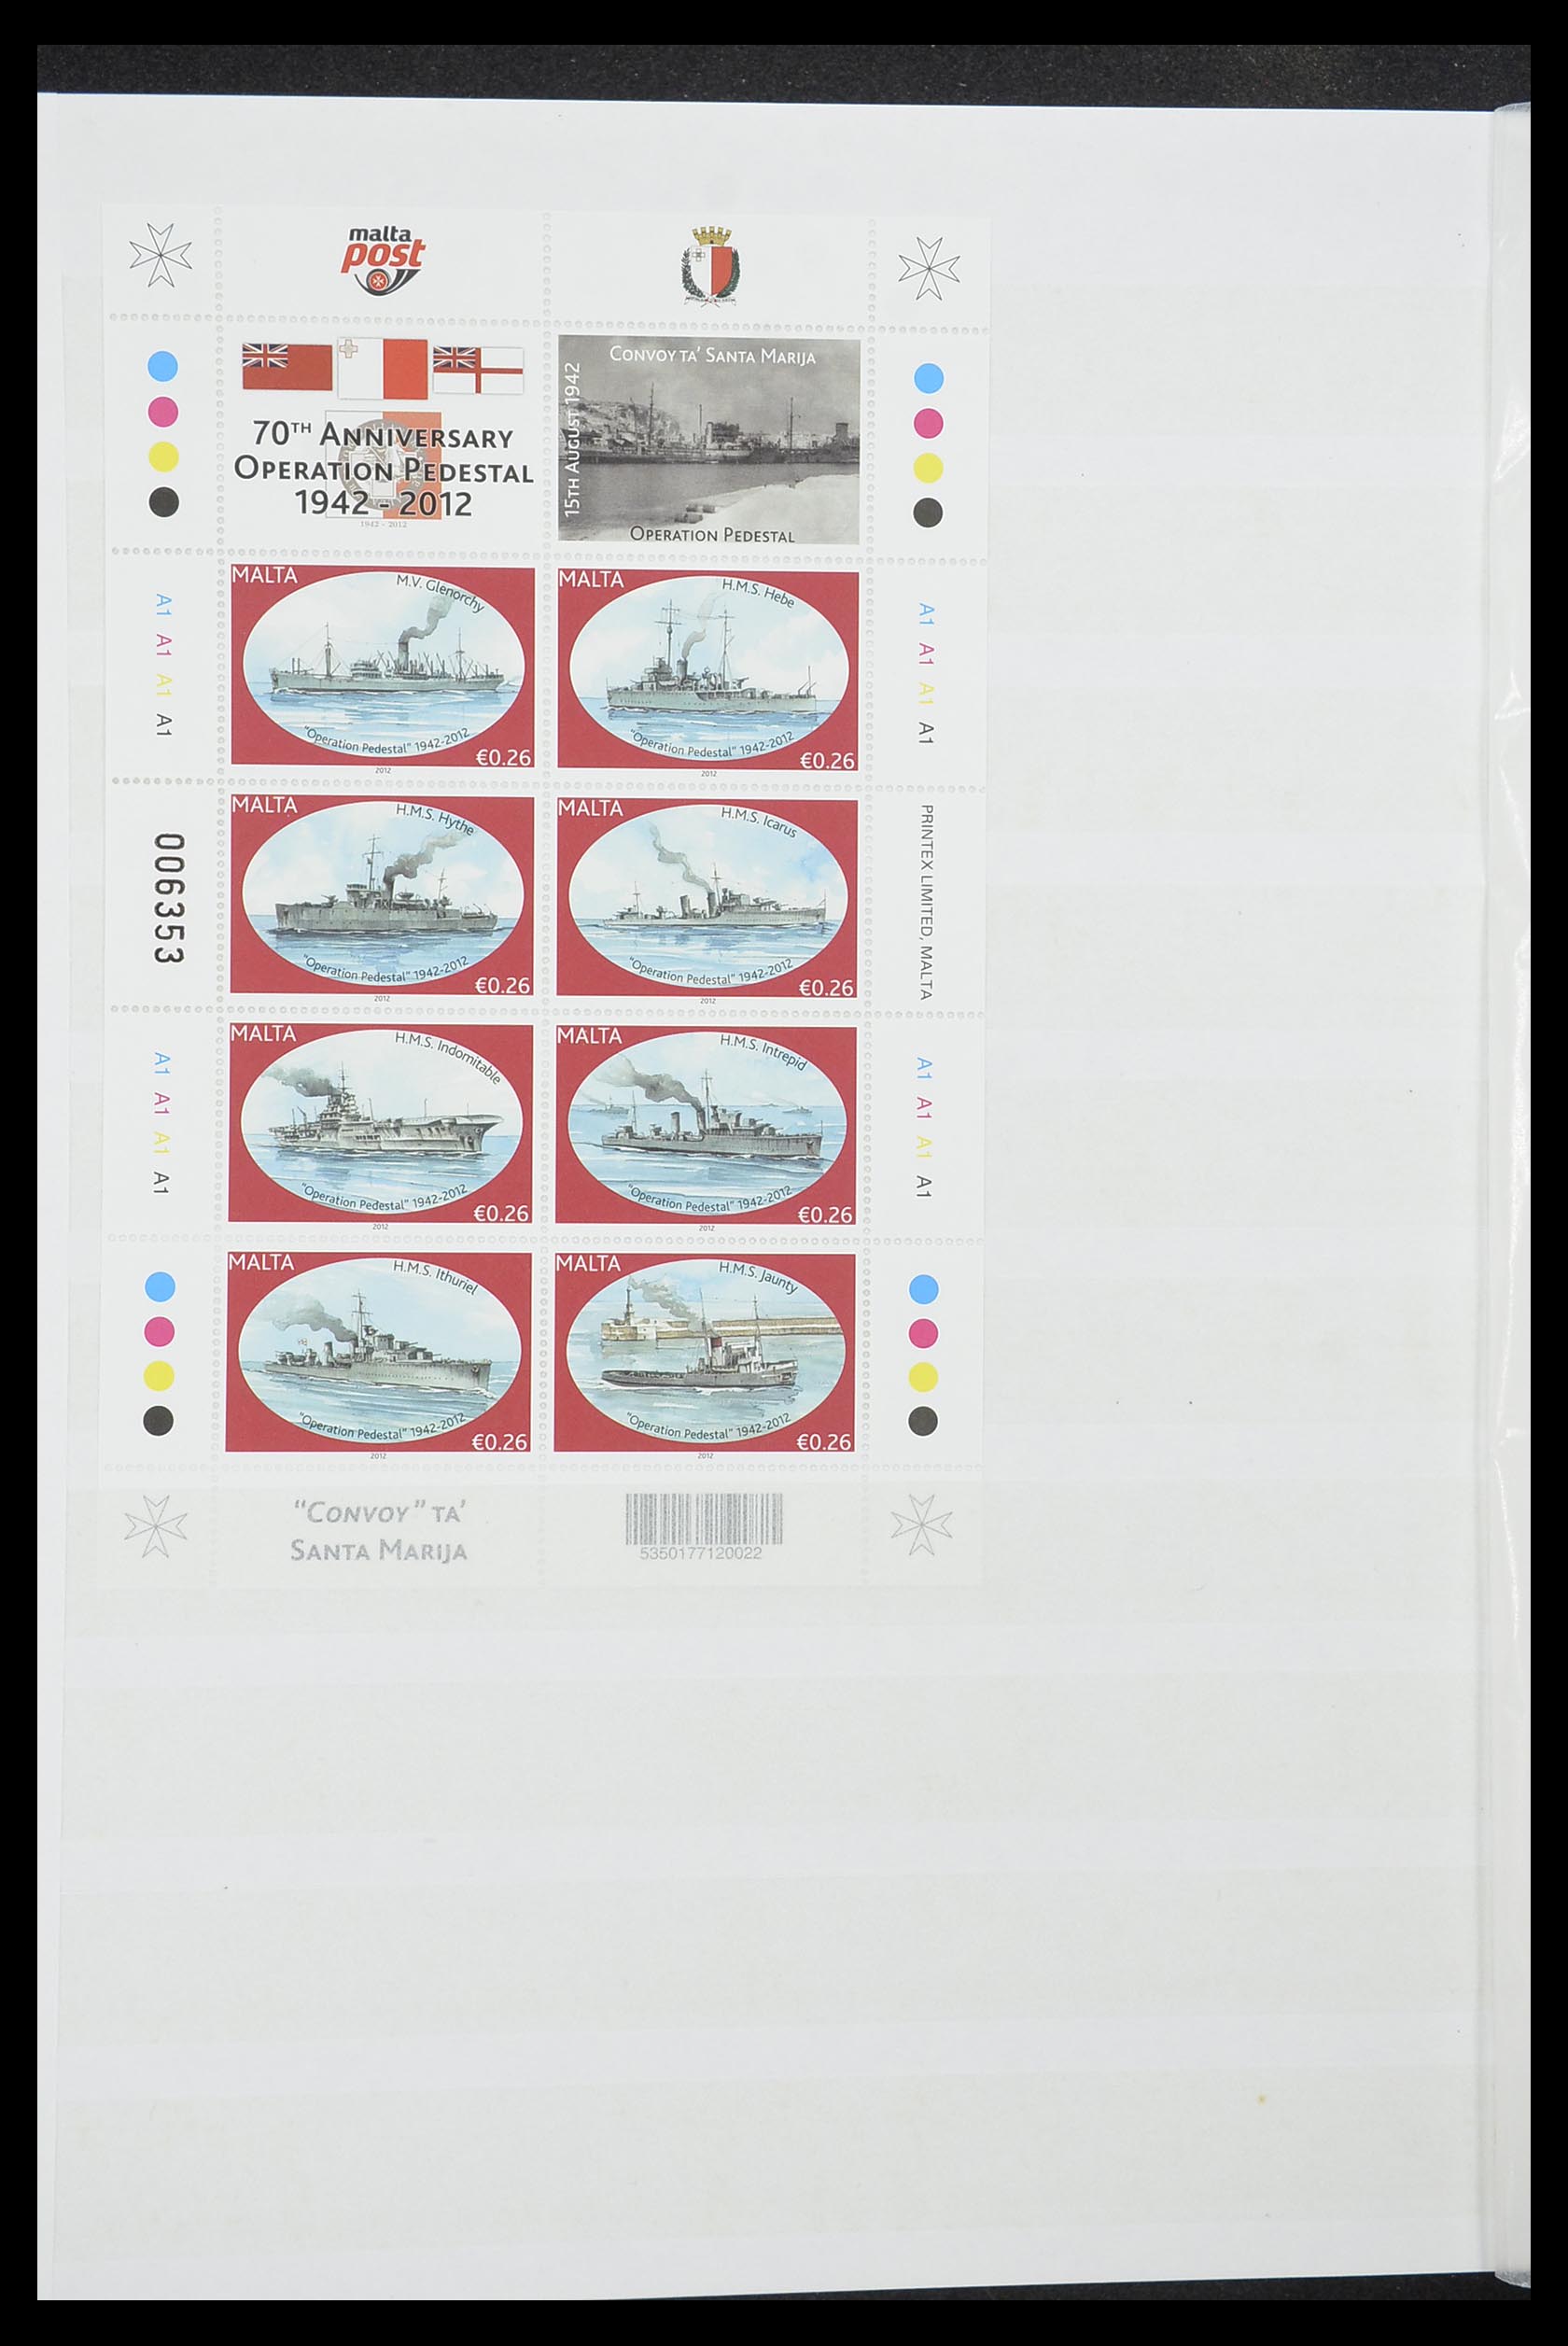 33827 072 - Stamp collection 33827 Malta 1964-2015.